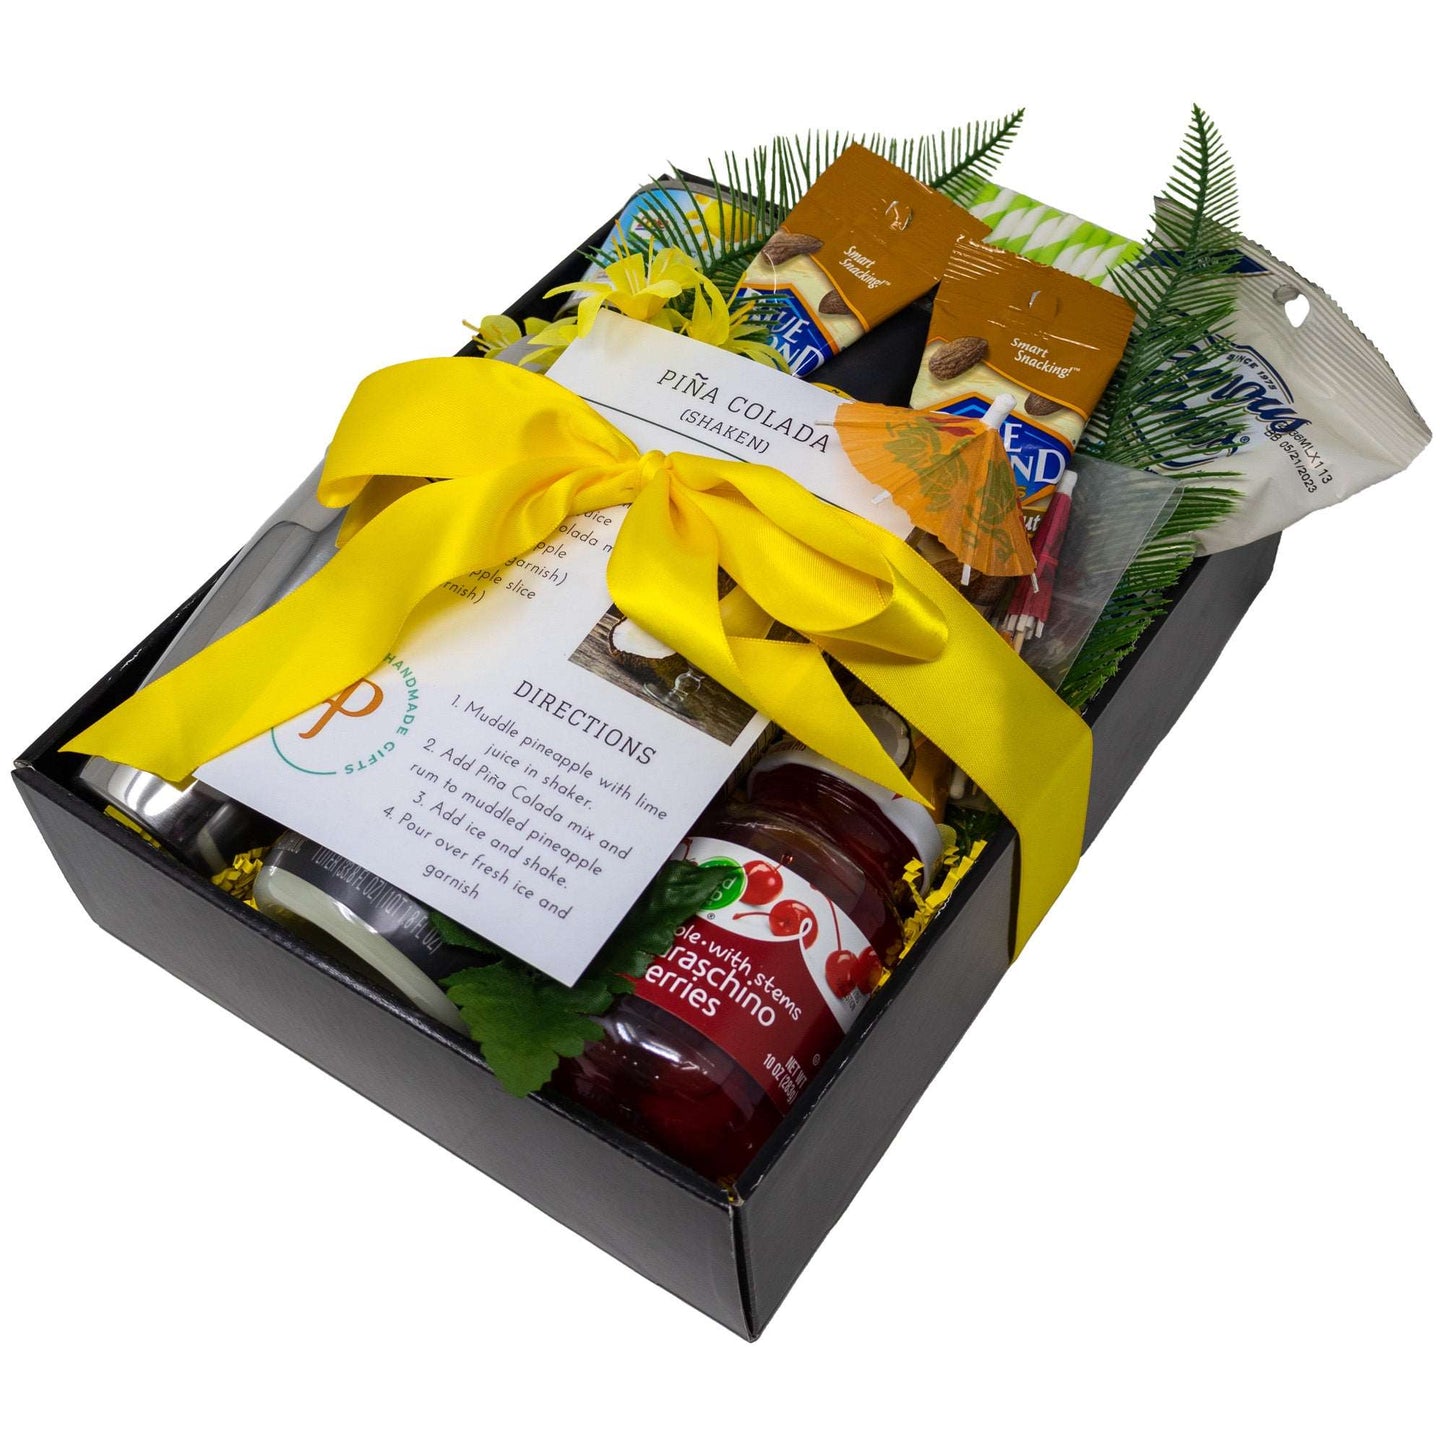 Piña Colada Mix Gift Basket with Recipe Card & Coconut Snacks